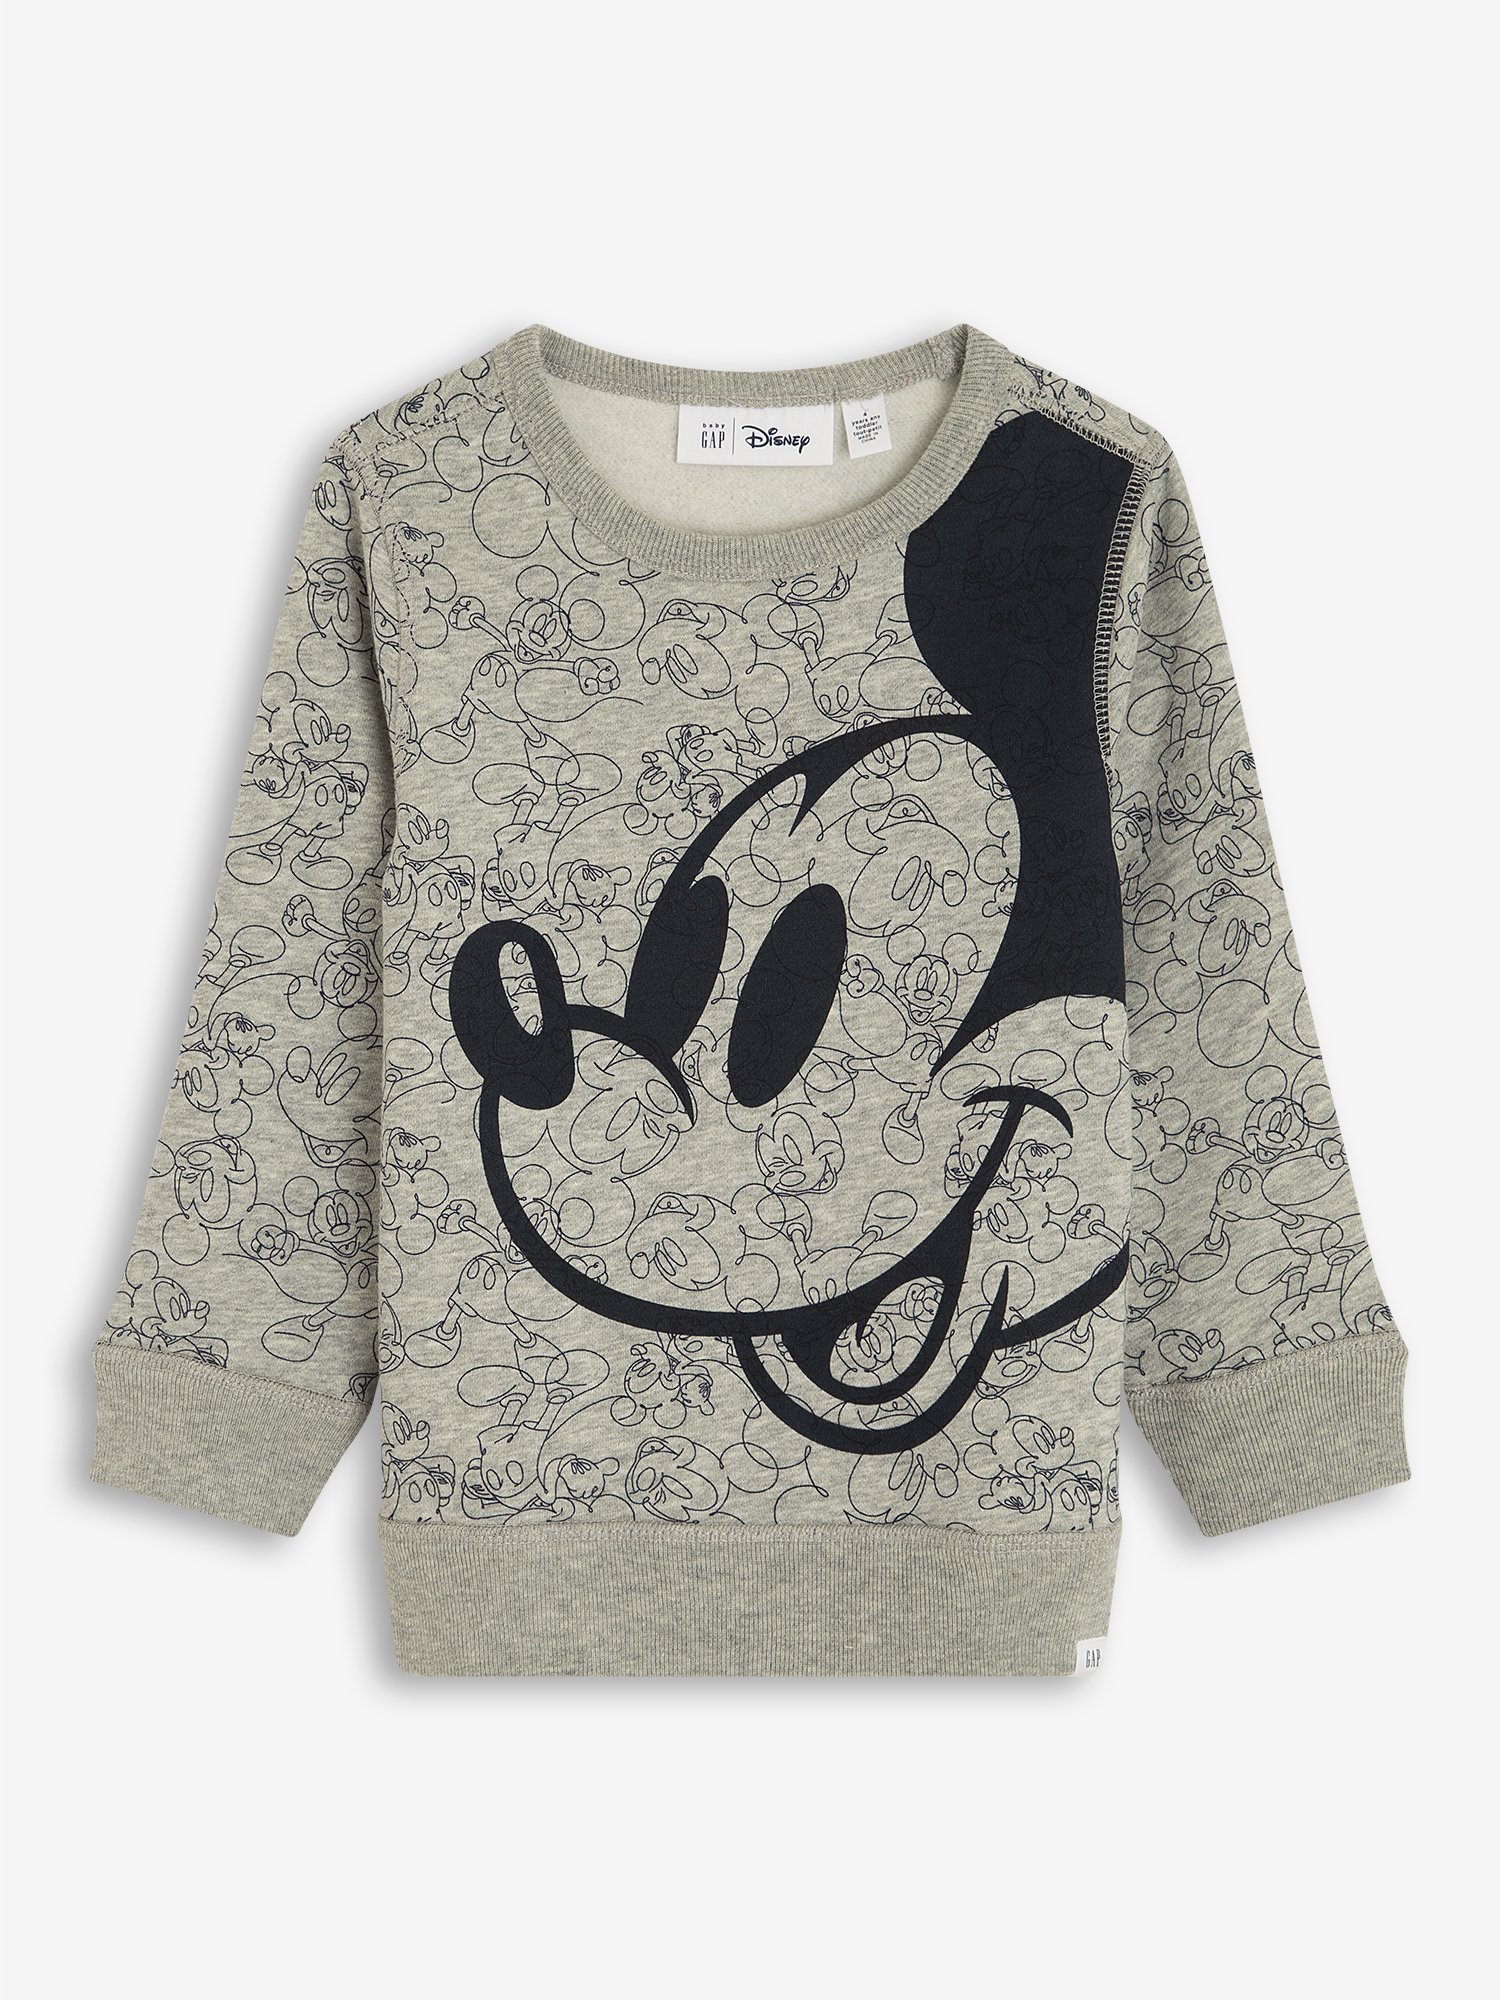 Disney Mickey Mouse Sweatshirt product image